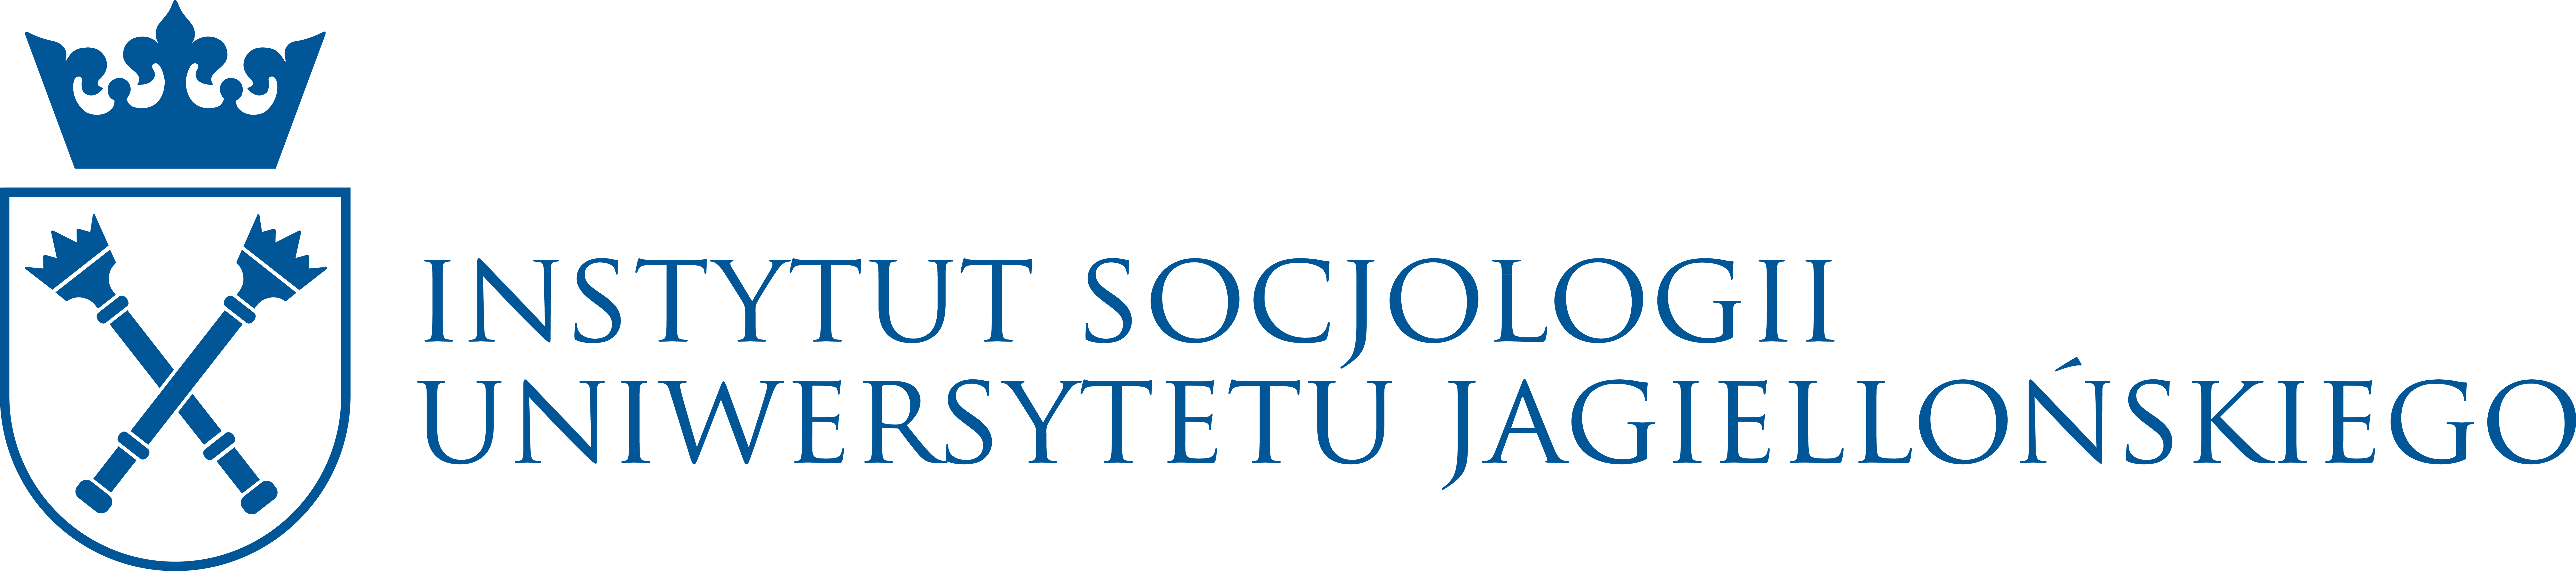 Institute of Sociology